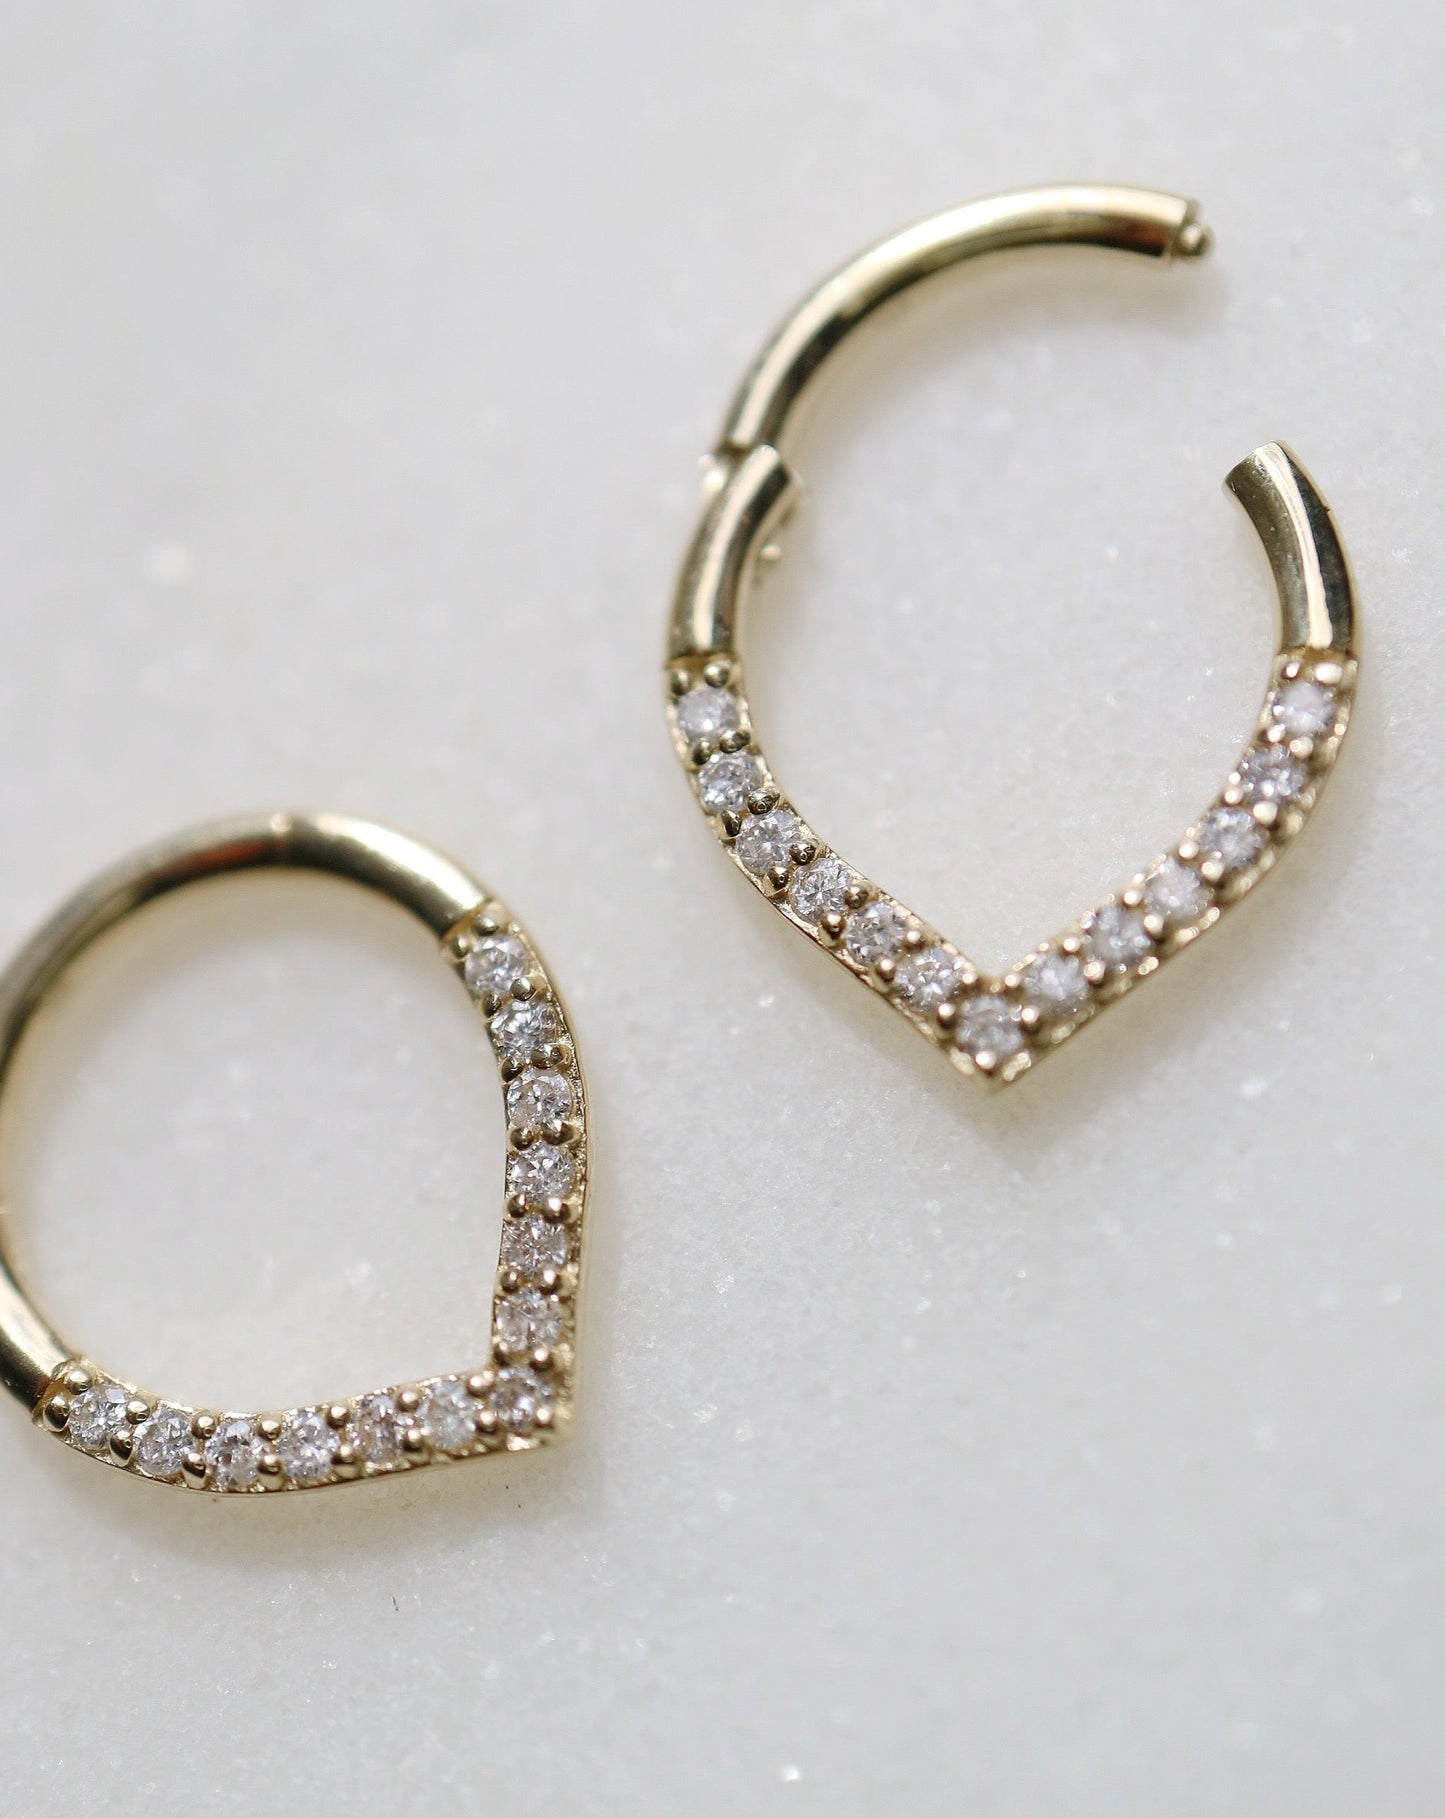 Diamond and gold daith piercings